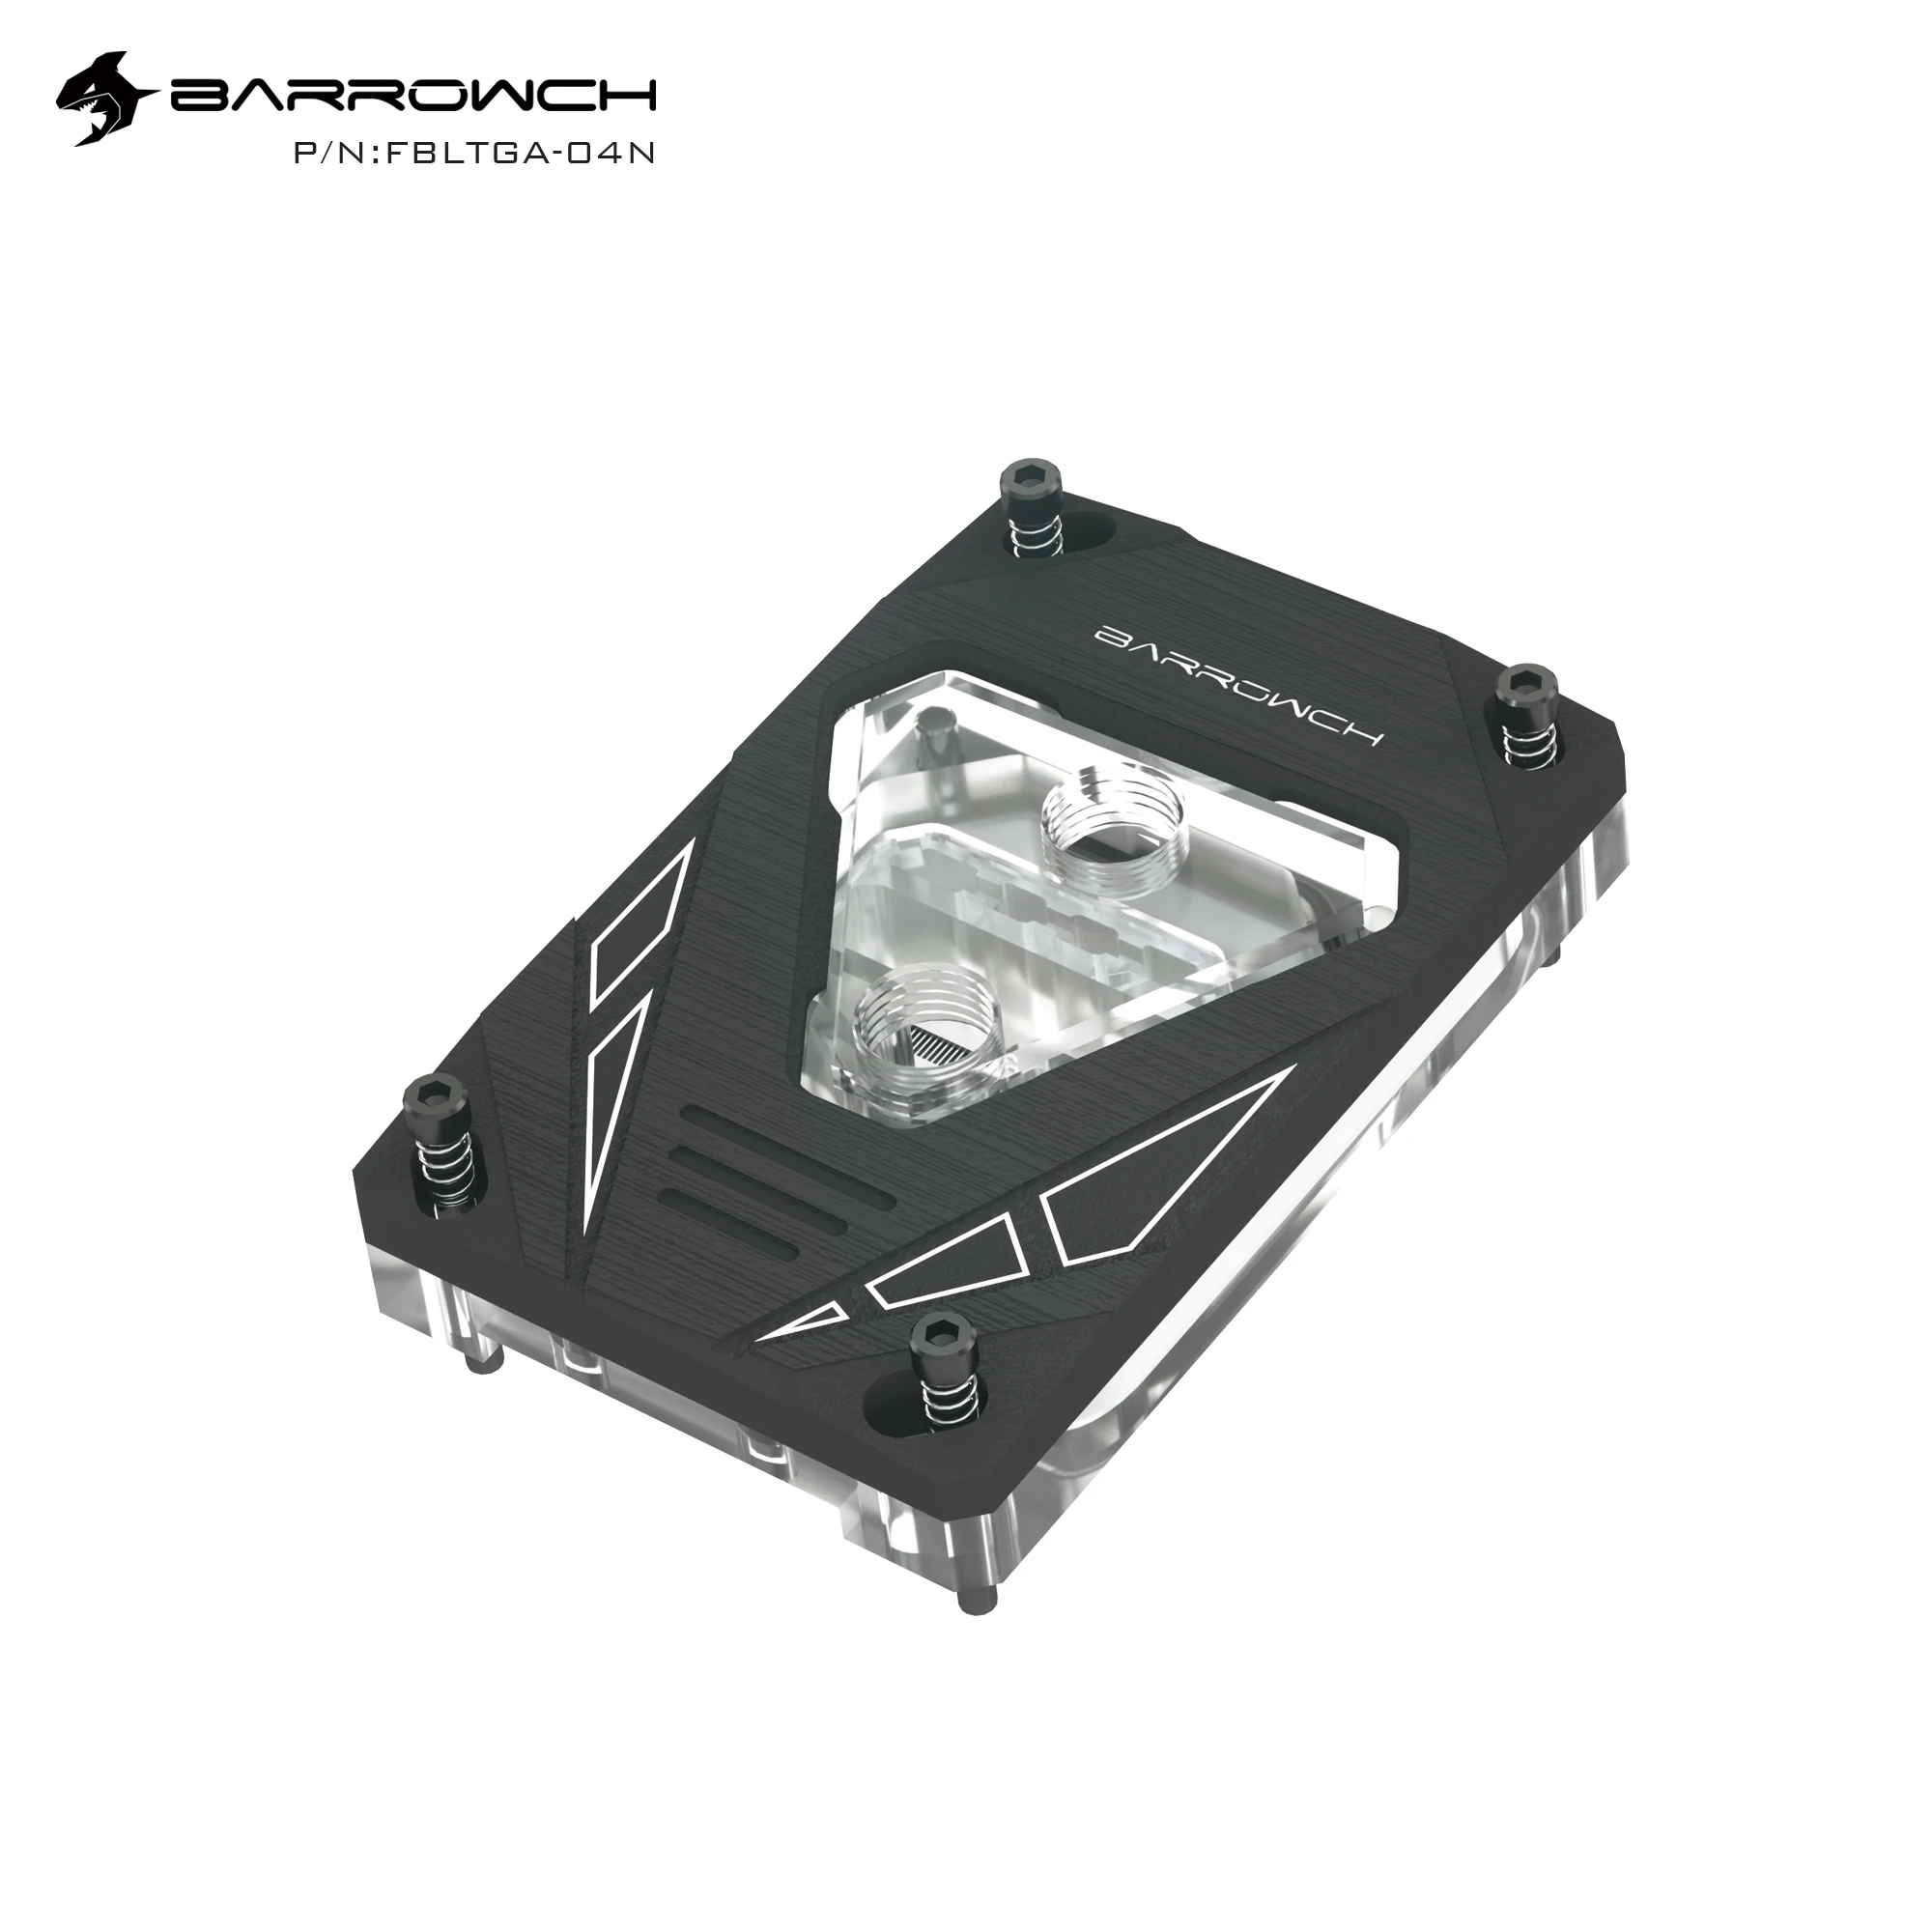 

Barrowch M series CPU water block AMD Ryzen AM4/AM3 platform radiator FBLTGA-04N